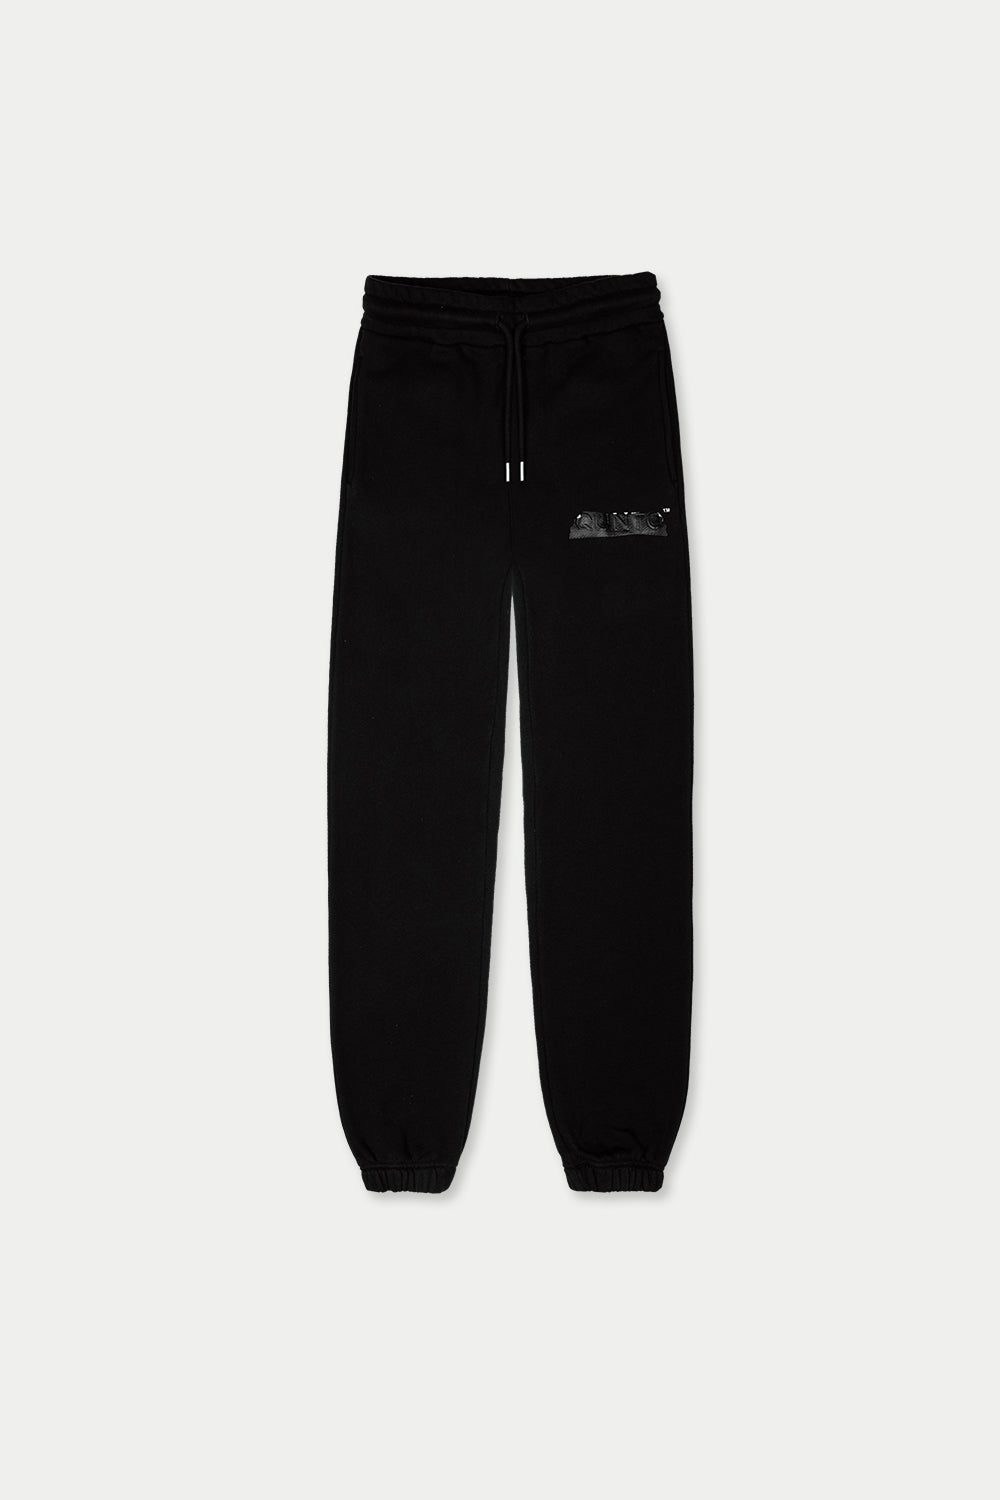 Coton Coupe Ltd - UK, Men [S-3XL] Fleece Jogger Trouser Open Hem Sweatpants  [Deep Night Black] (Small, Deep Night Black) – Cotton Cut